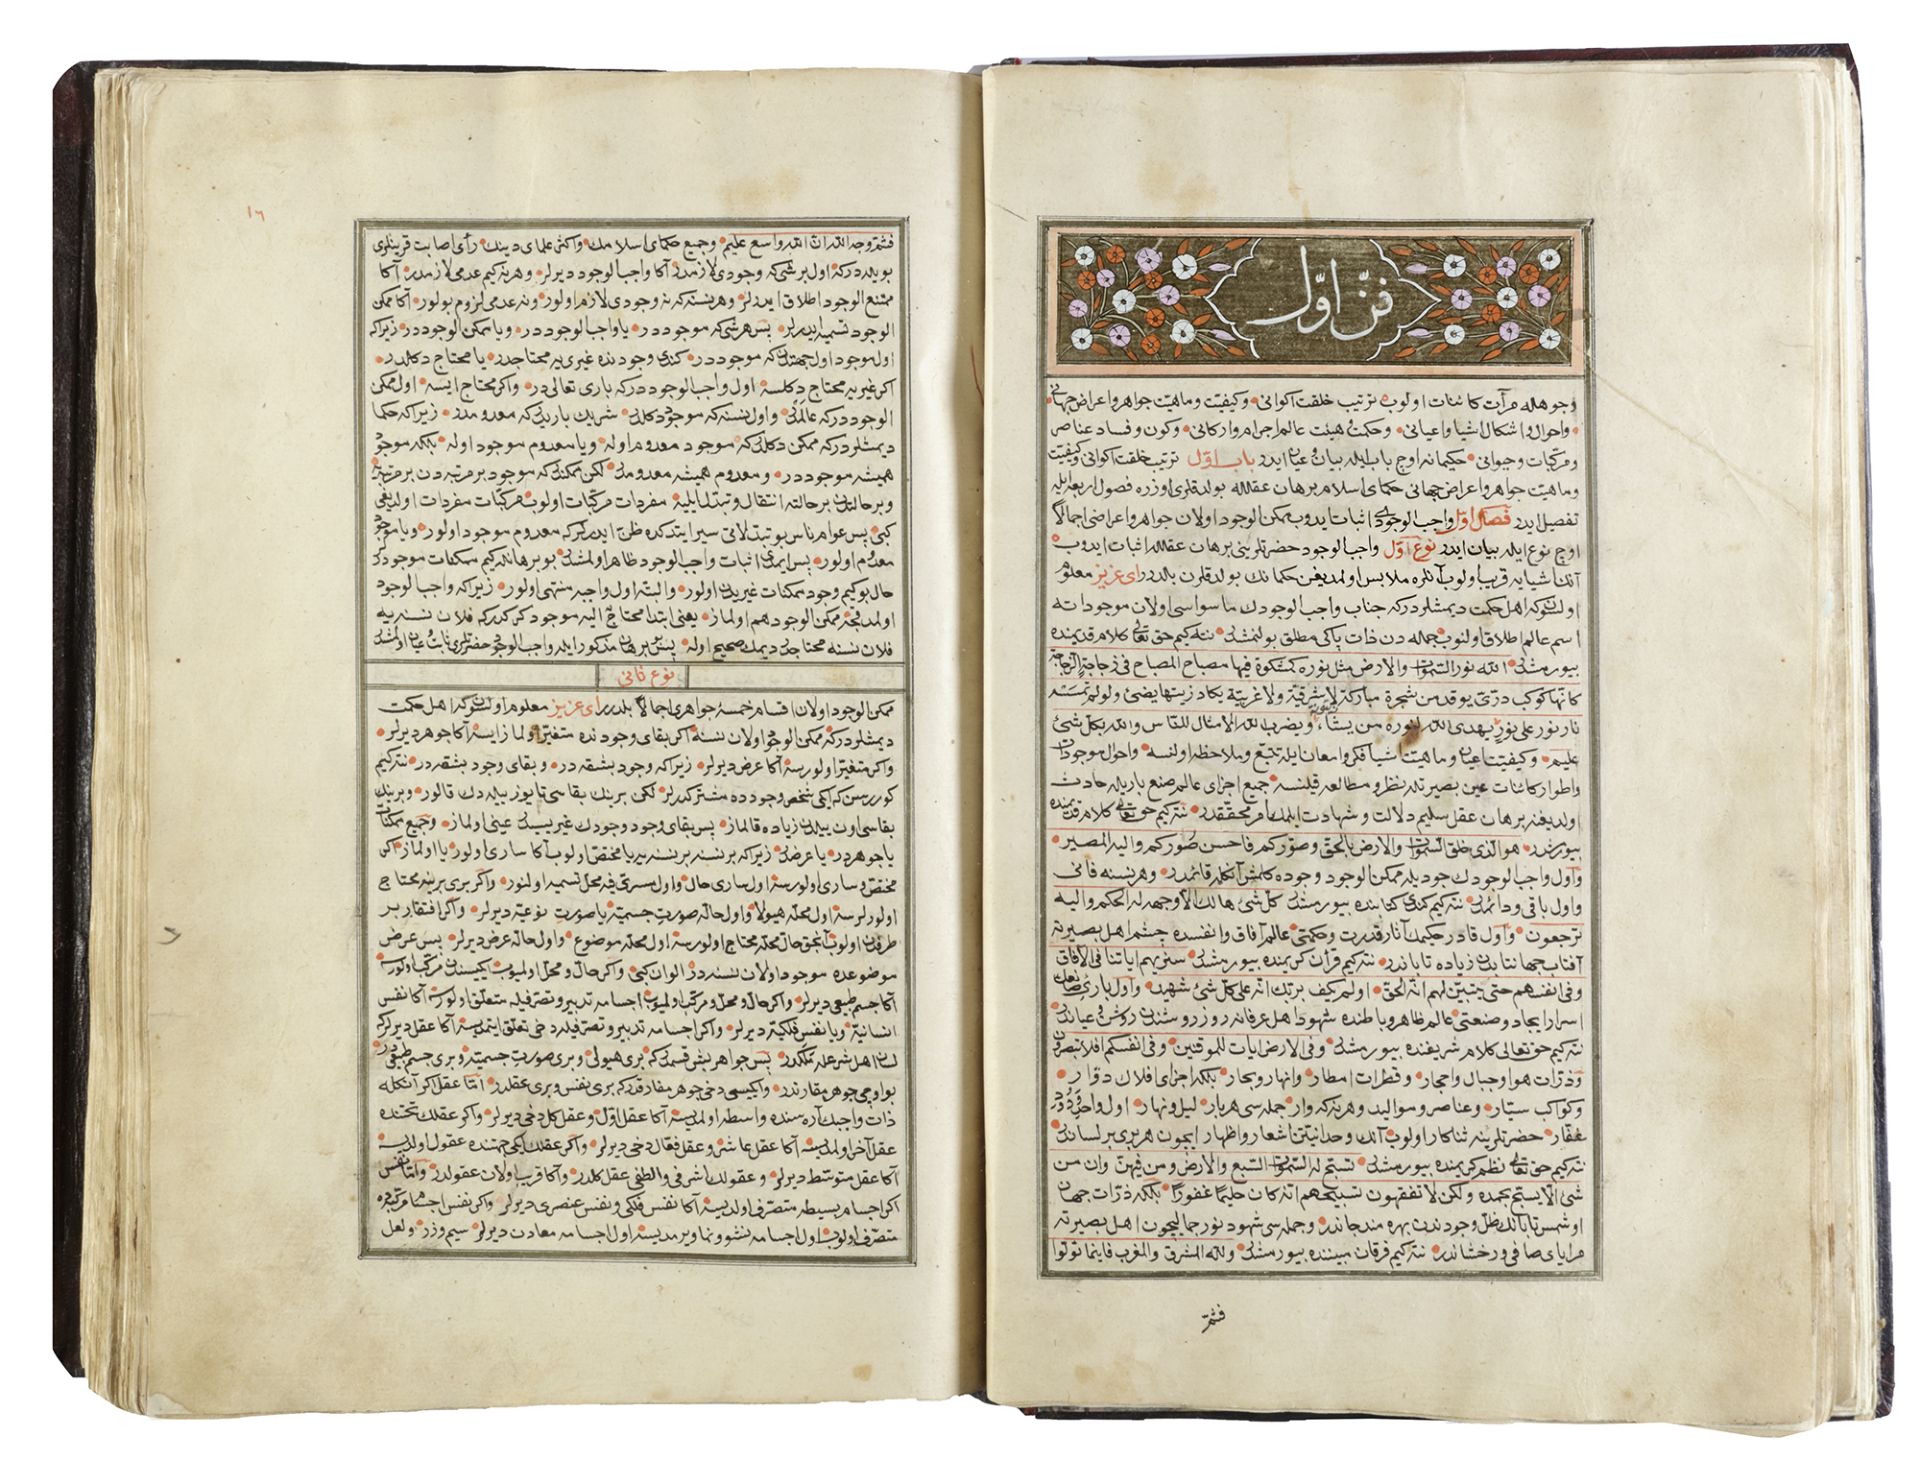 MARIFETNAME, IBRAHIM HAKKI, COPIED BY SAE'D ALLAH BIN ALI BIN AHMED, TURKEY, 1221 AH/1806 AD - Image 19 of 58